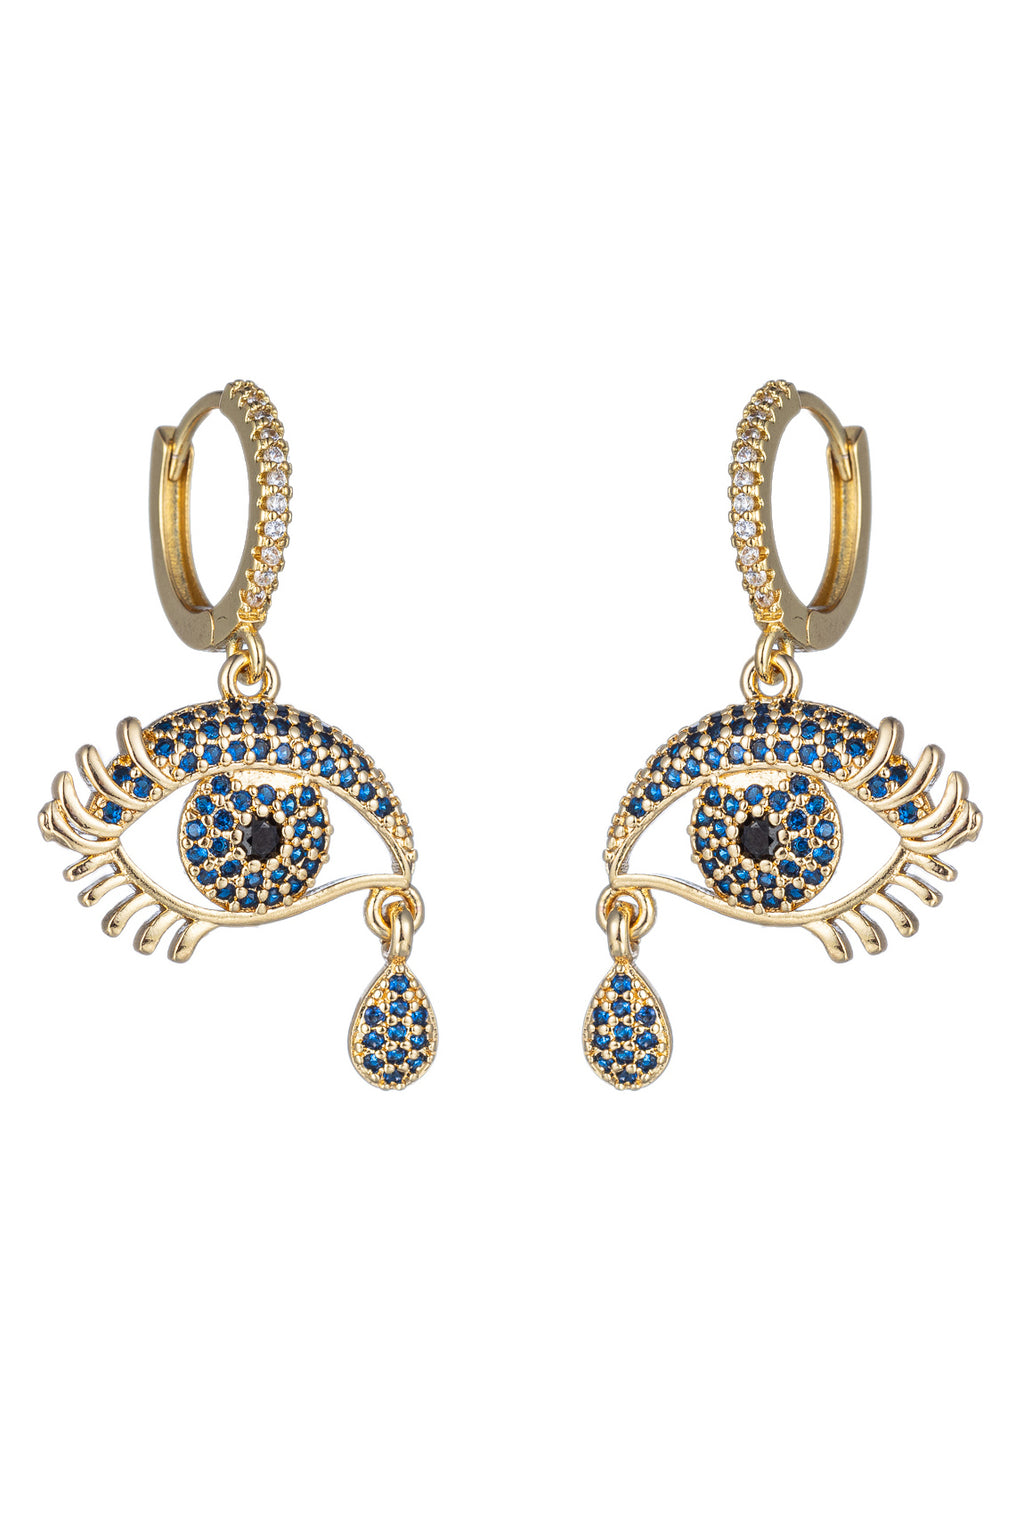 Gold brass eye teardrop earrings studded with blue CZ crystals.